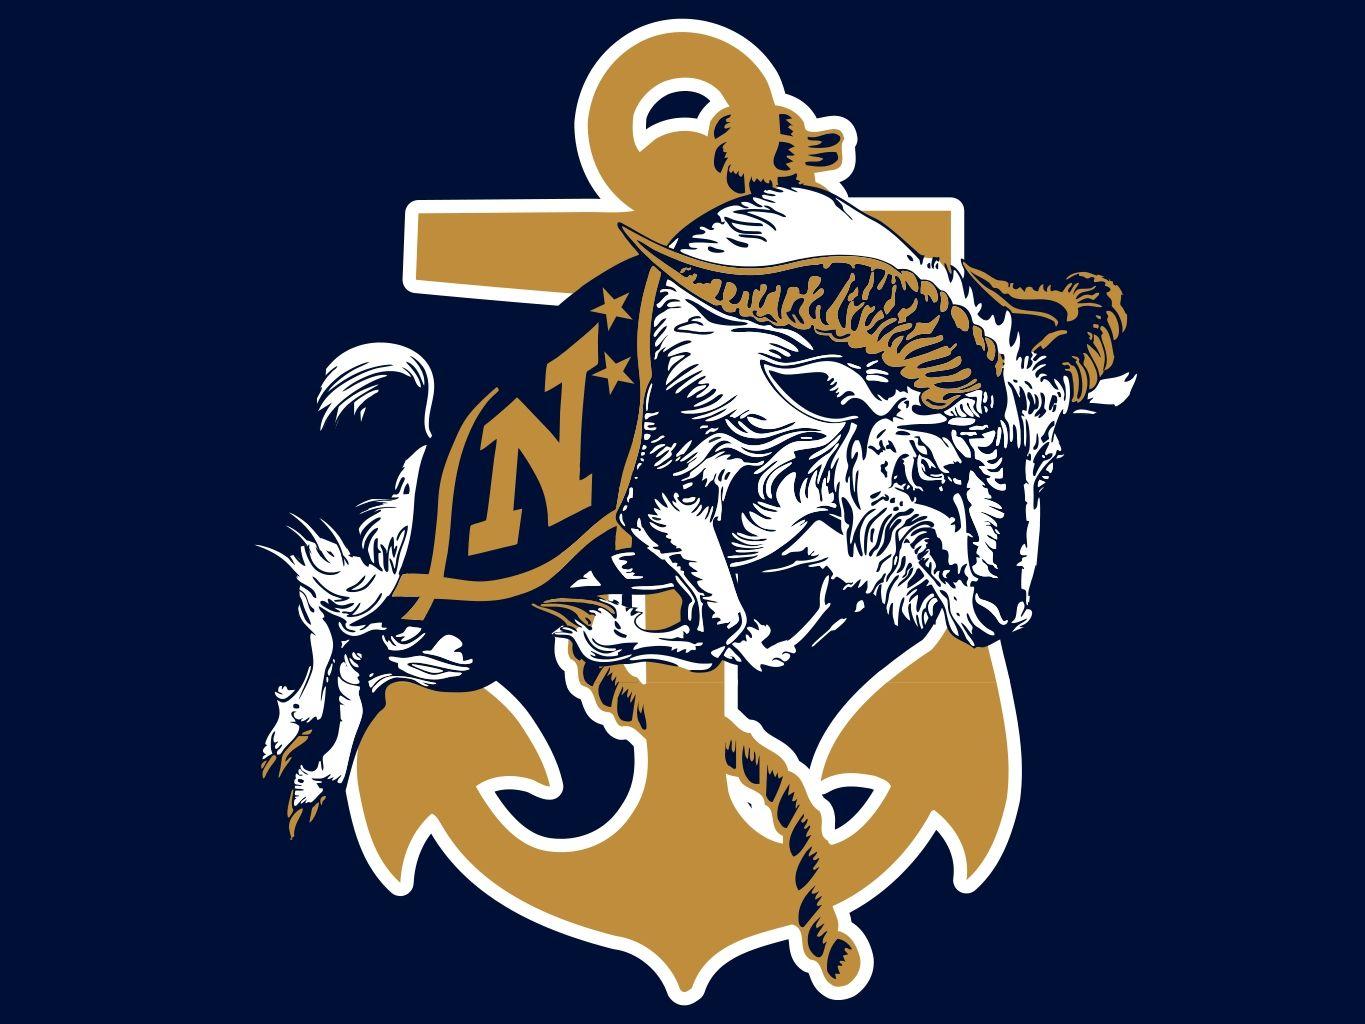 Navy Midshipmen. Navy football, Navy midshipmen, Naval academy football